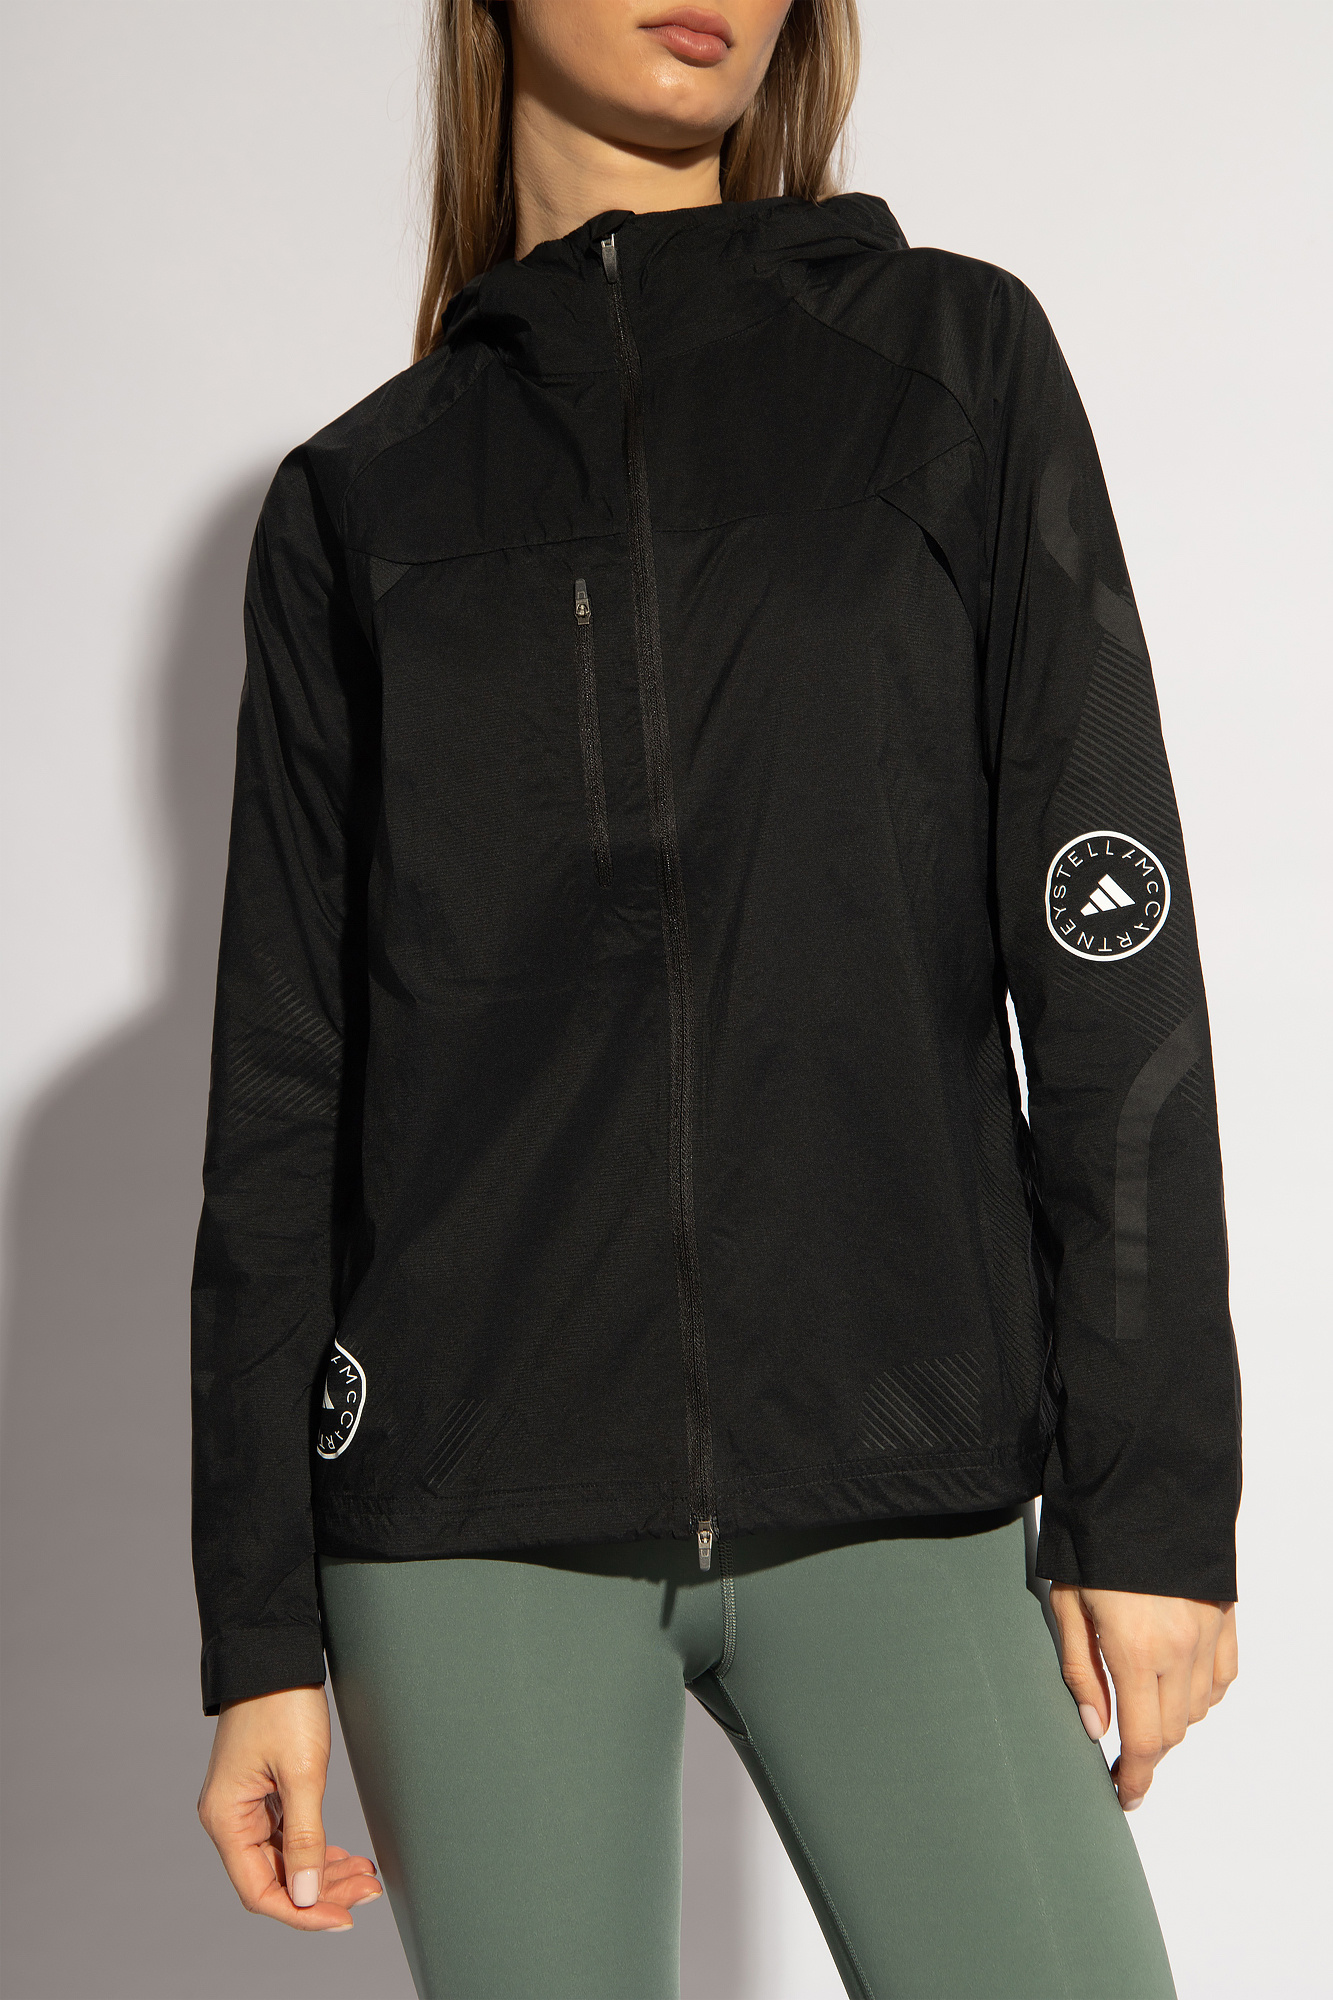 Black Patterned hoodie ADIDAS by Stella McCartney - Vitkac Canada